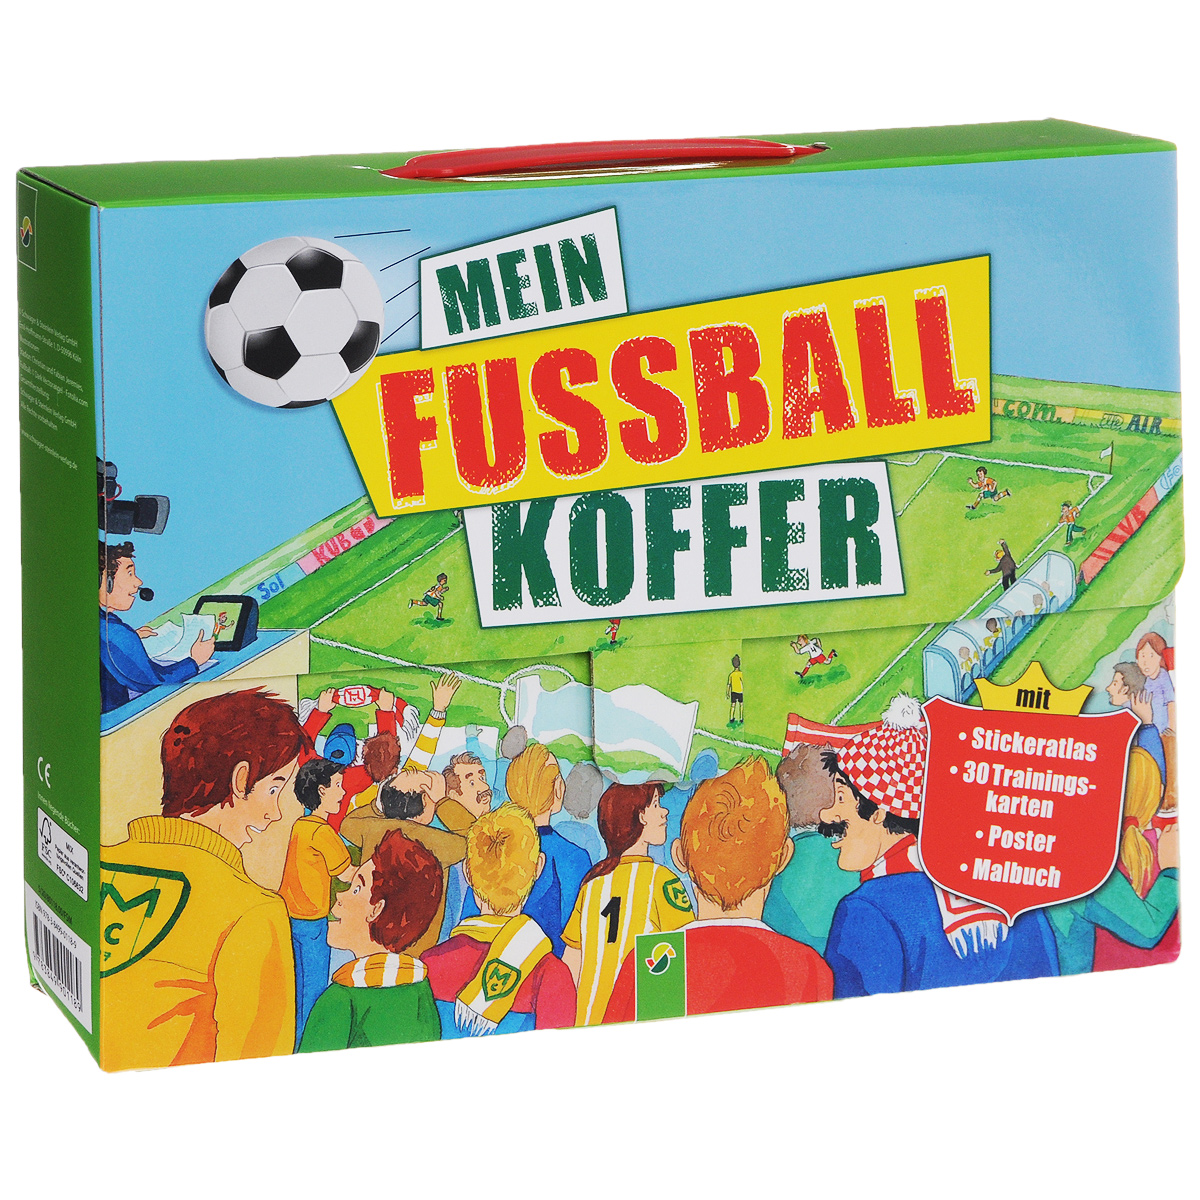 Mein Fussball Koffer (комплект из 2 книг, набора из 30 карточек и плаката)